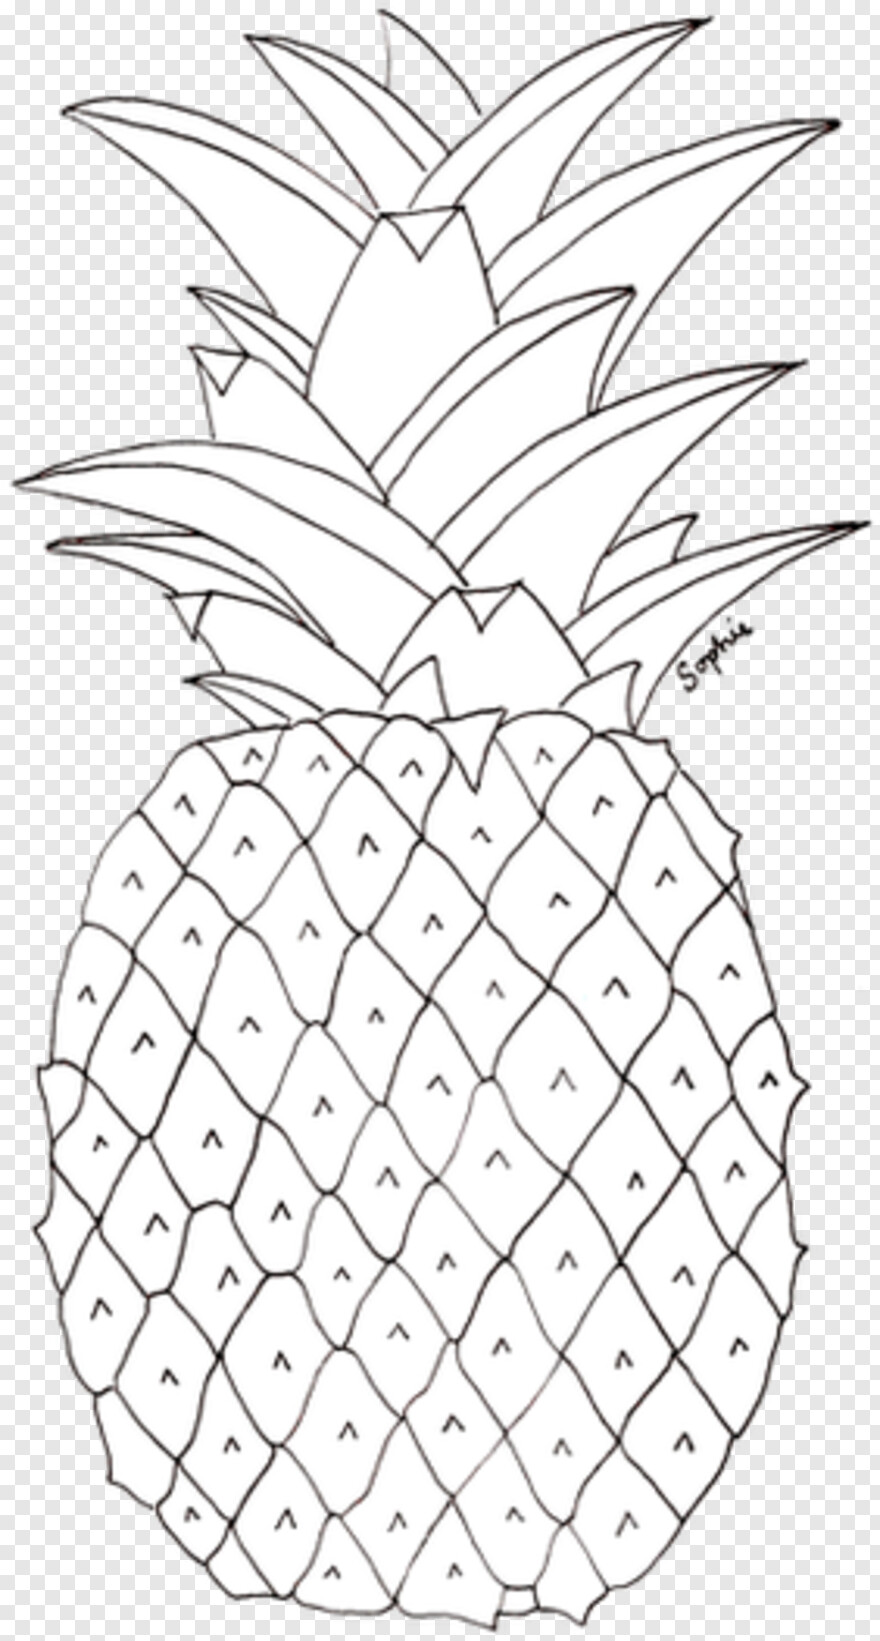 pineapple # 980607